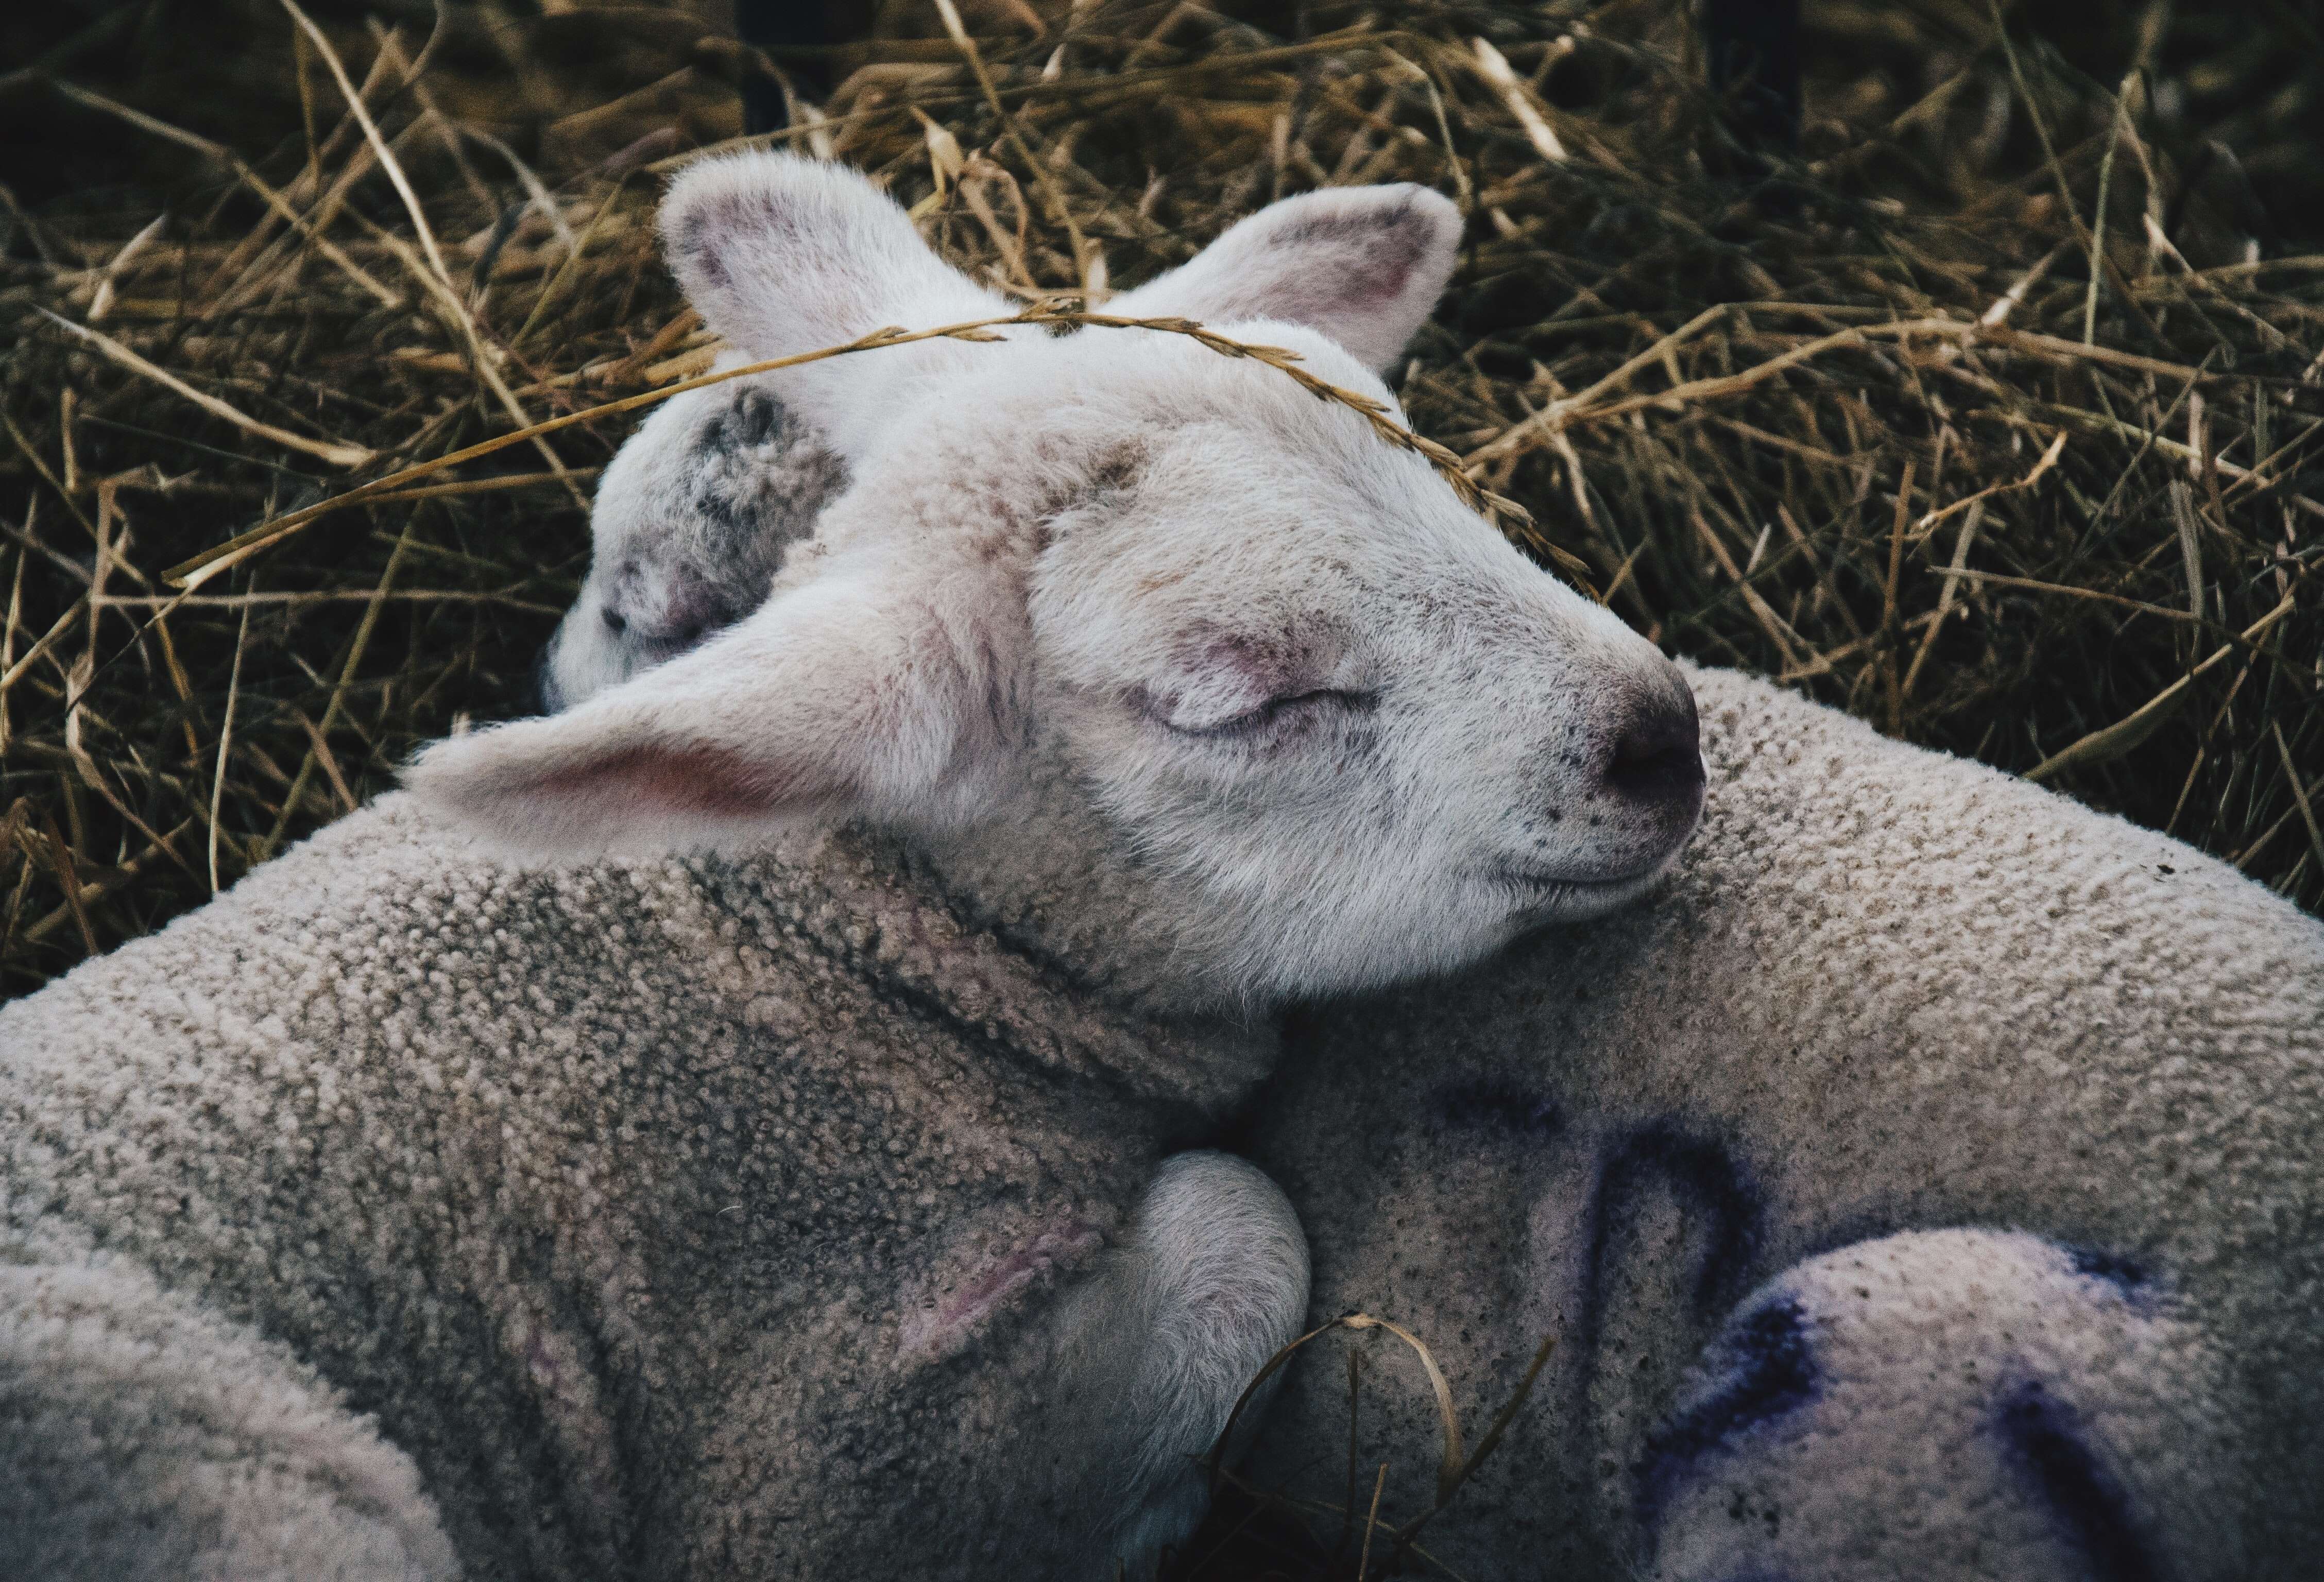 How shepherds save lambs, with James Rebanks